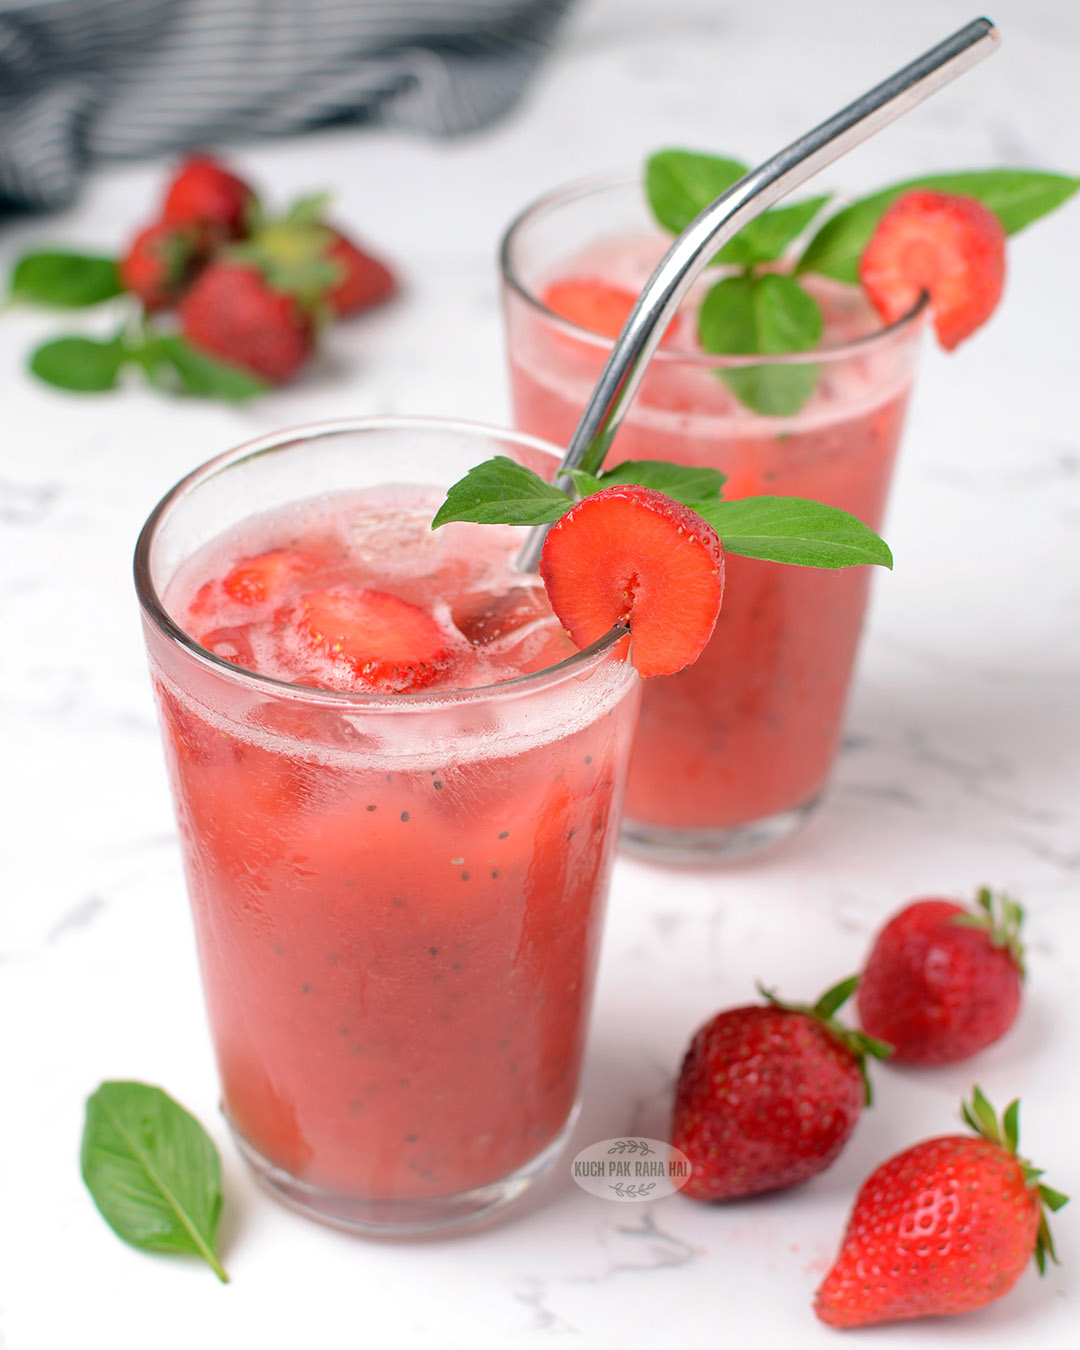 Strawberry coconut drink recipe.